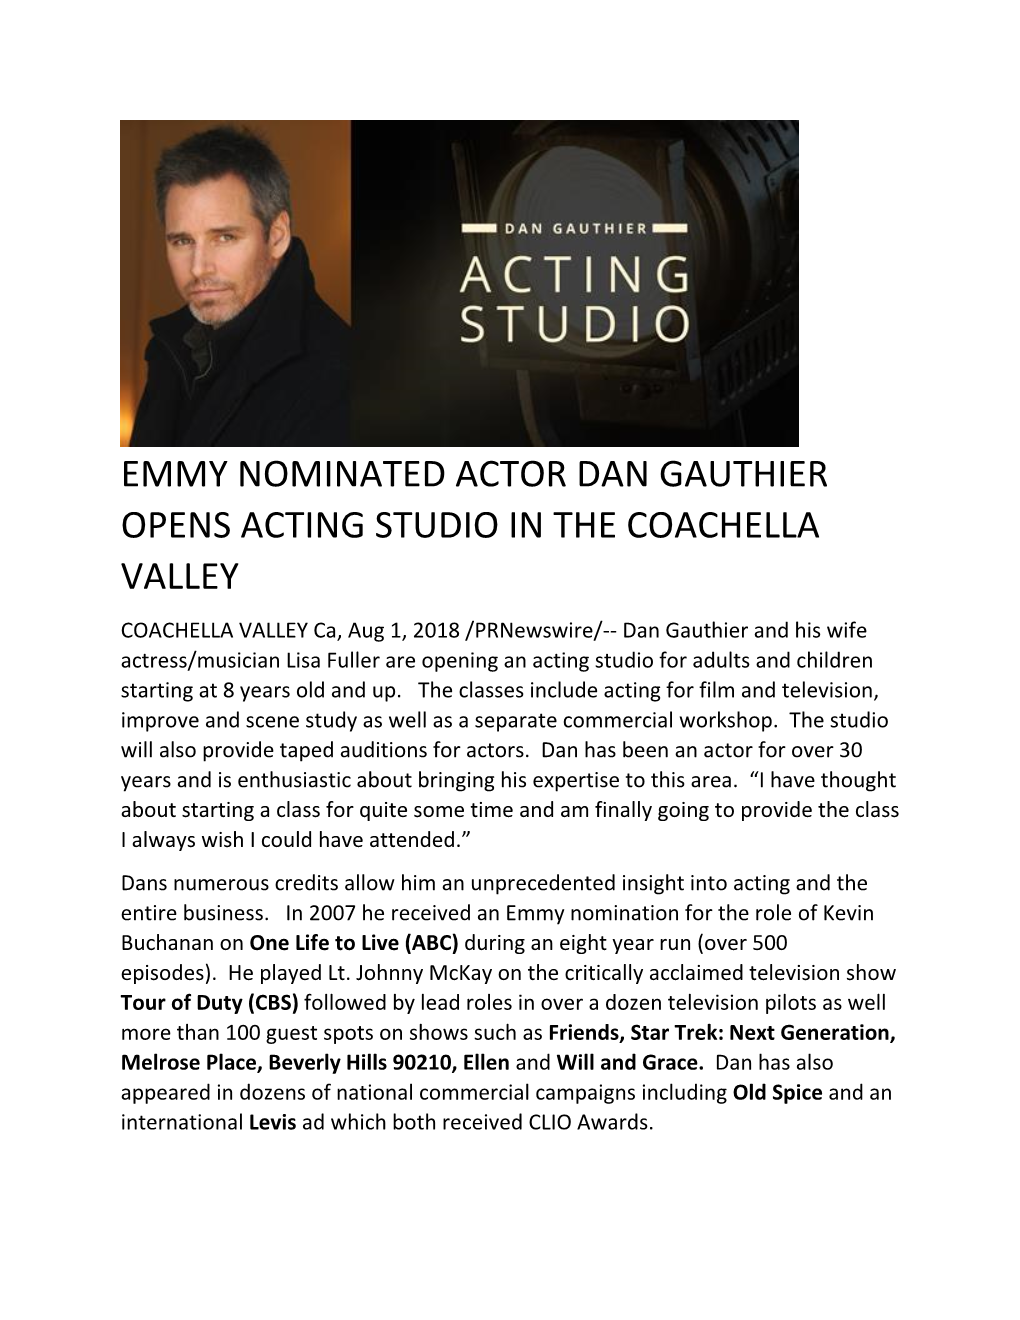 Emmy Nominated Actor Dan Gauthier Opens Acting Studio in the Coachella